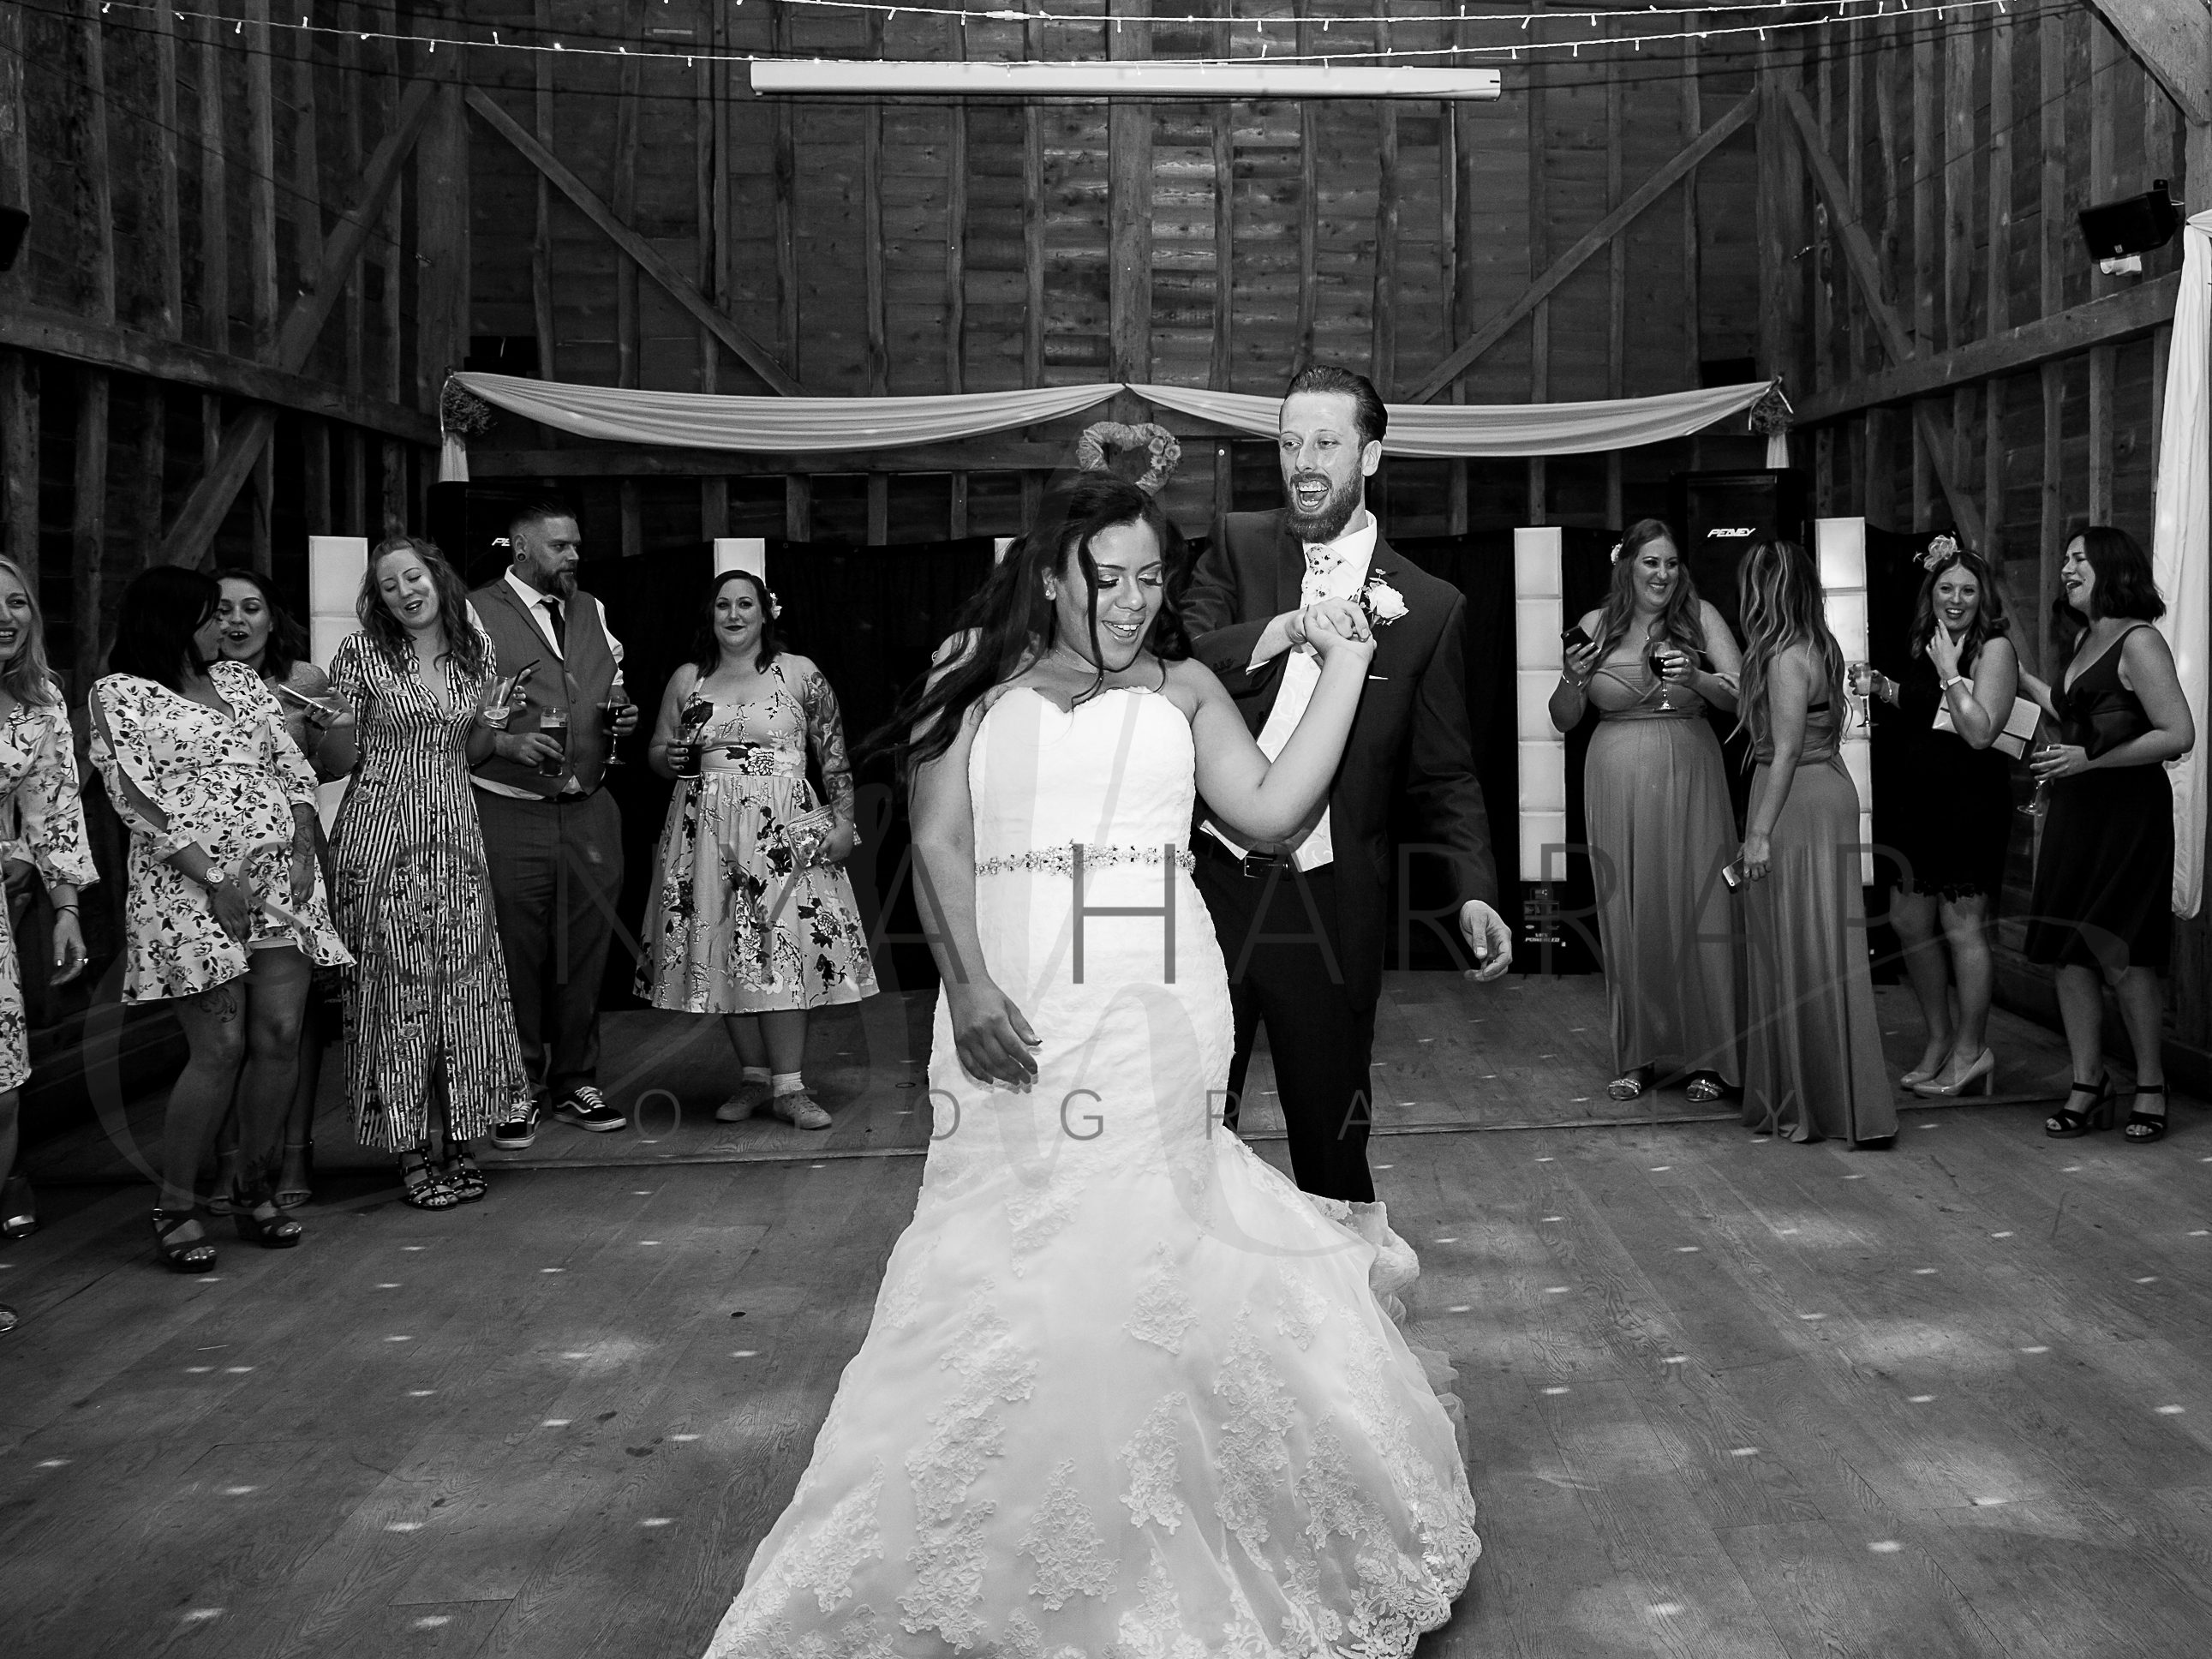 1st dance Tewinbury farm hotel wedding photograph of bride and groom by Sonya Harrap photographer confetti shot